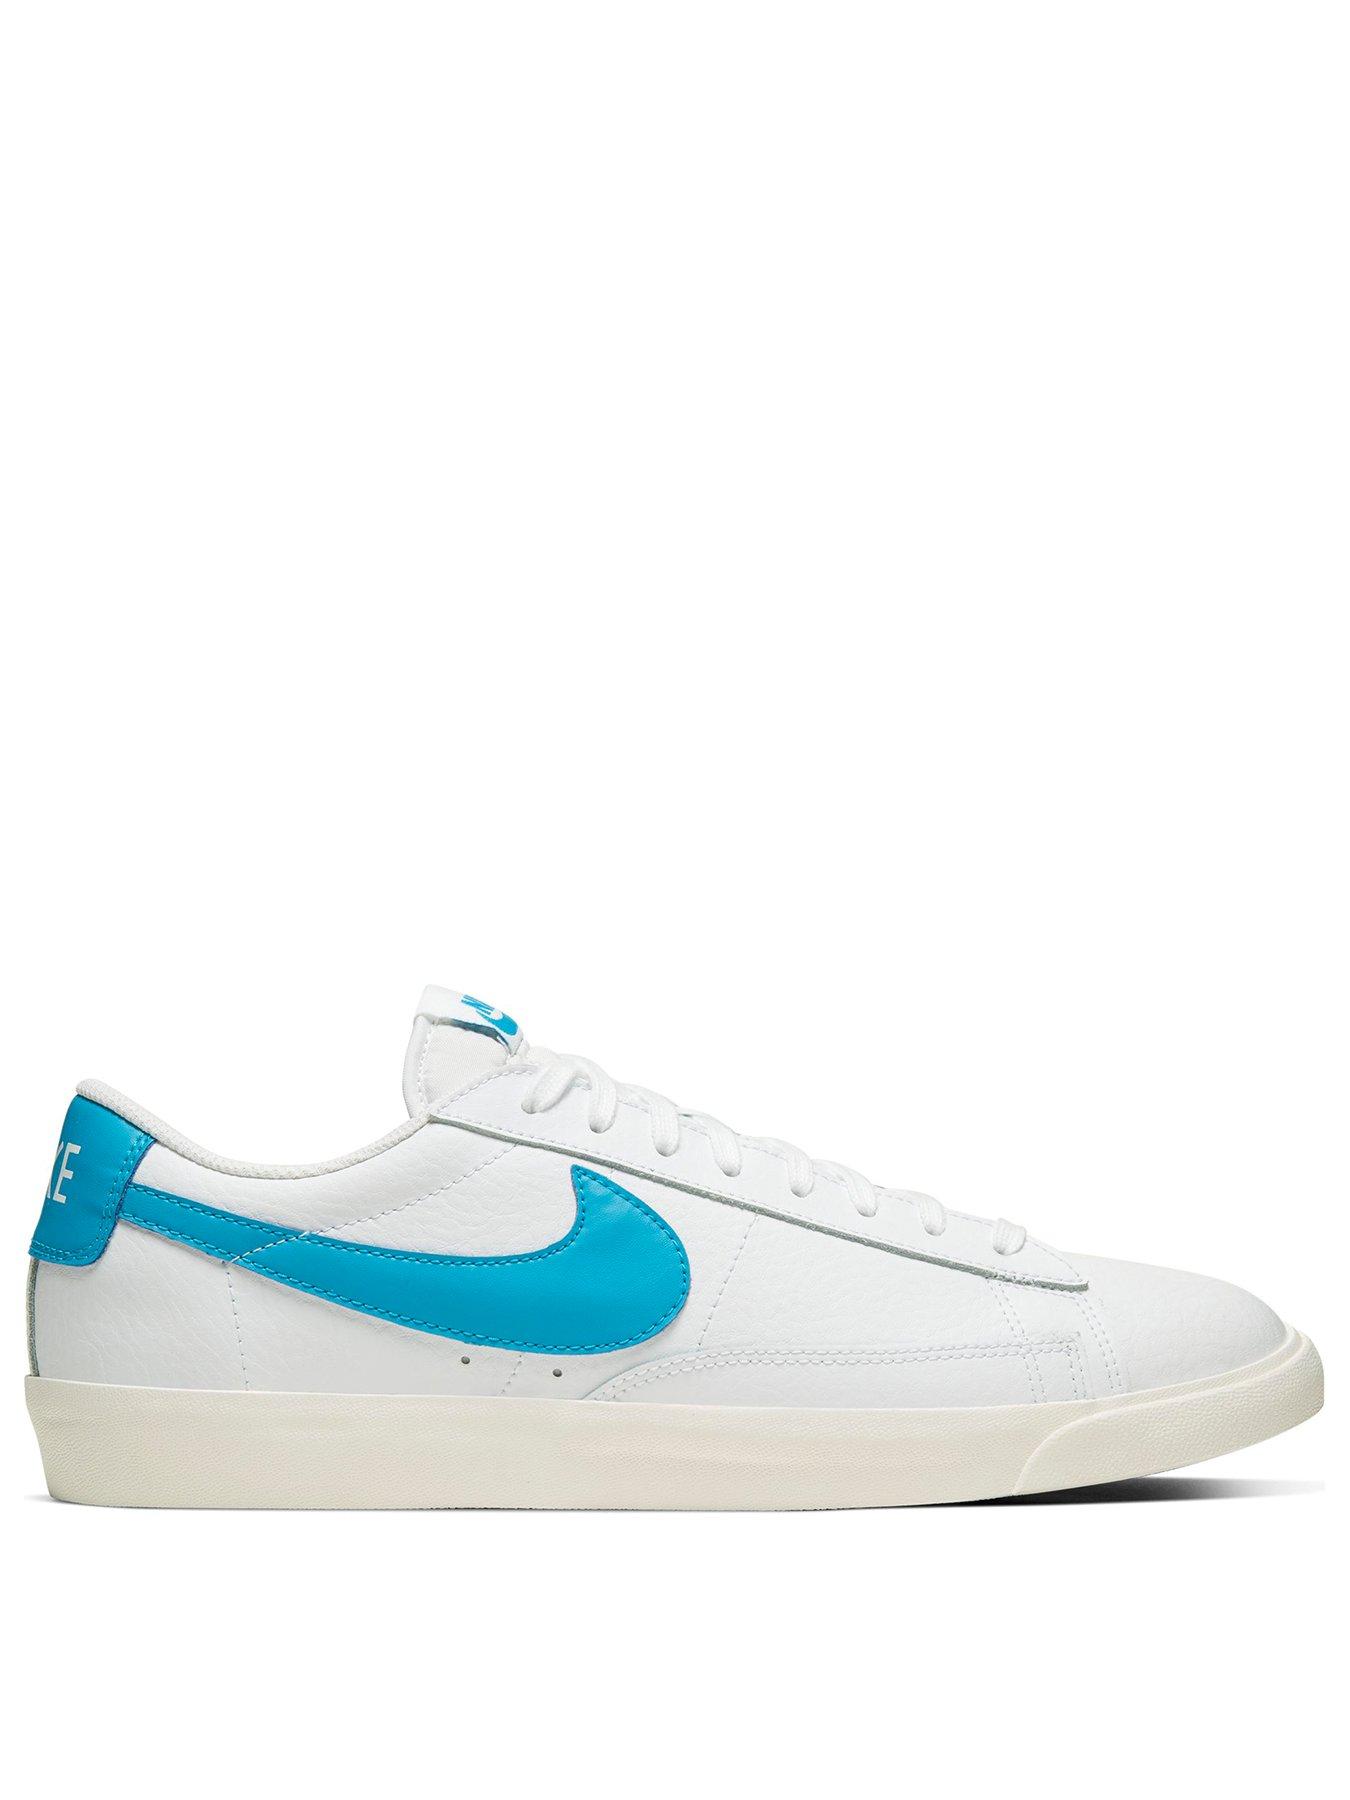 Nike Blazer Low Leather White Blue Very Co Uk